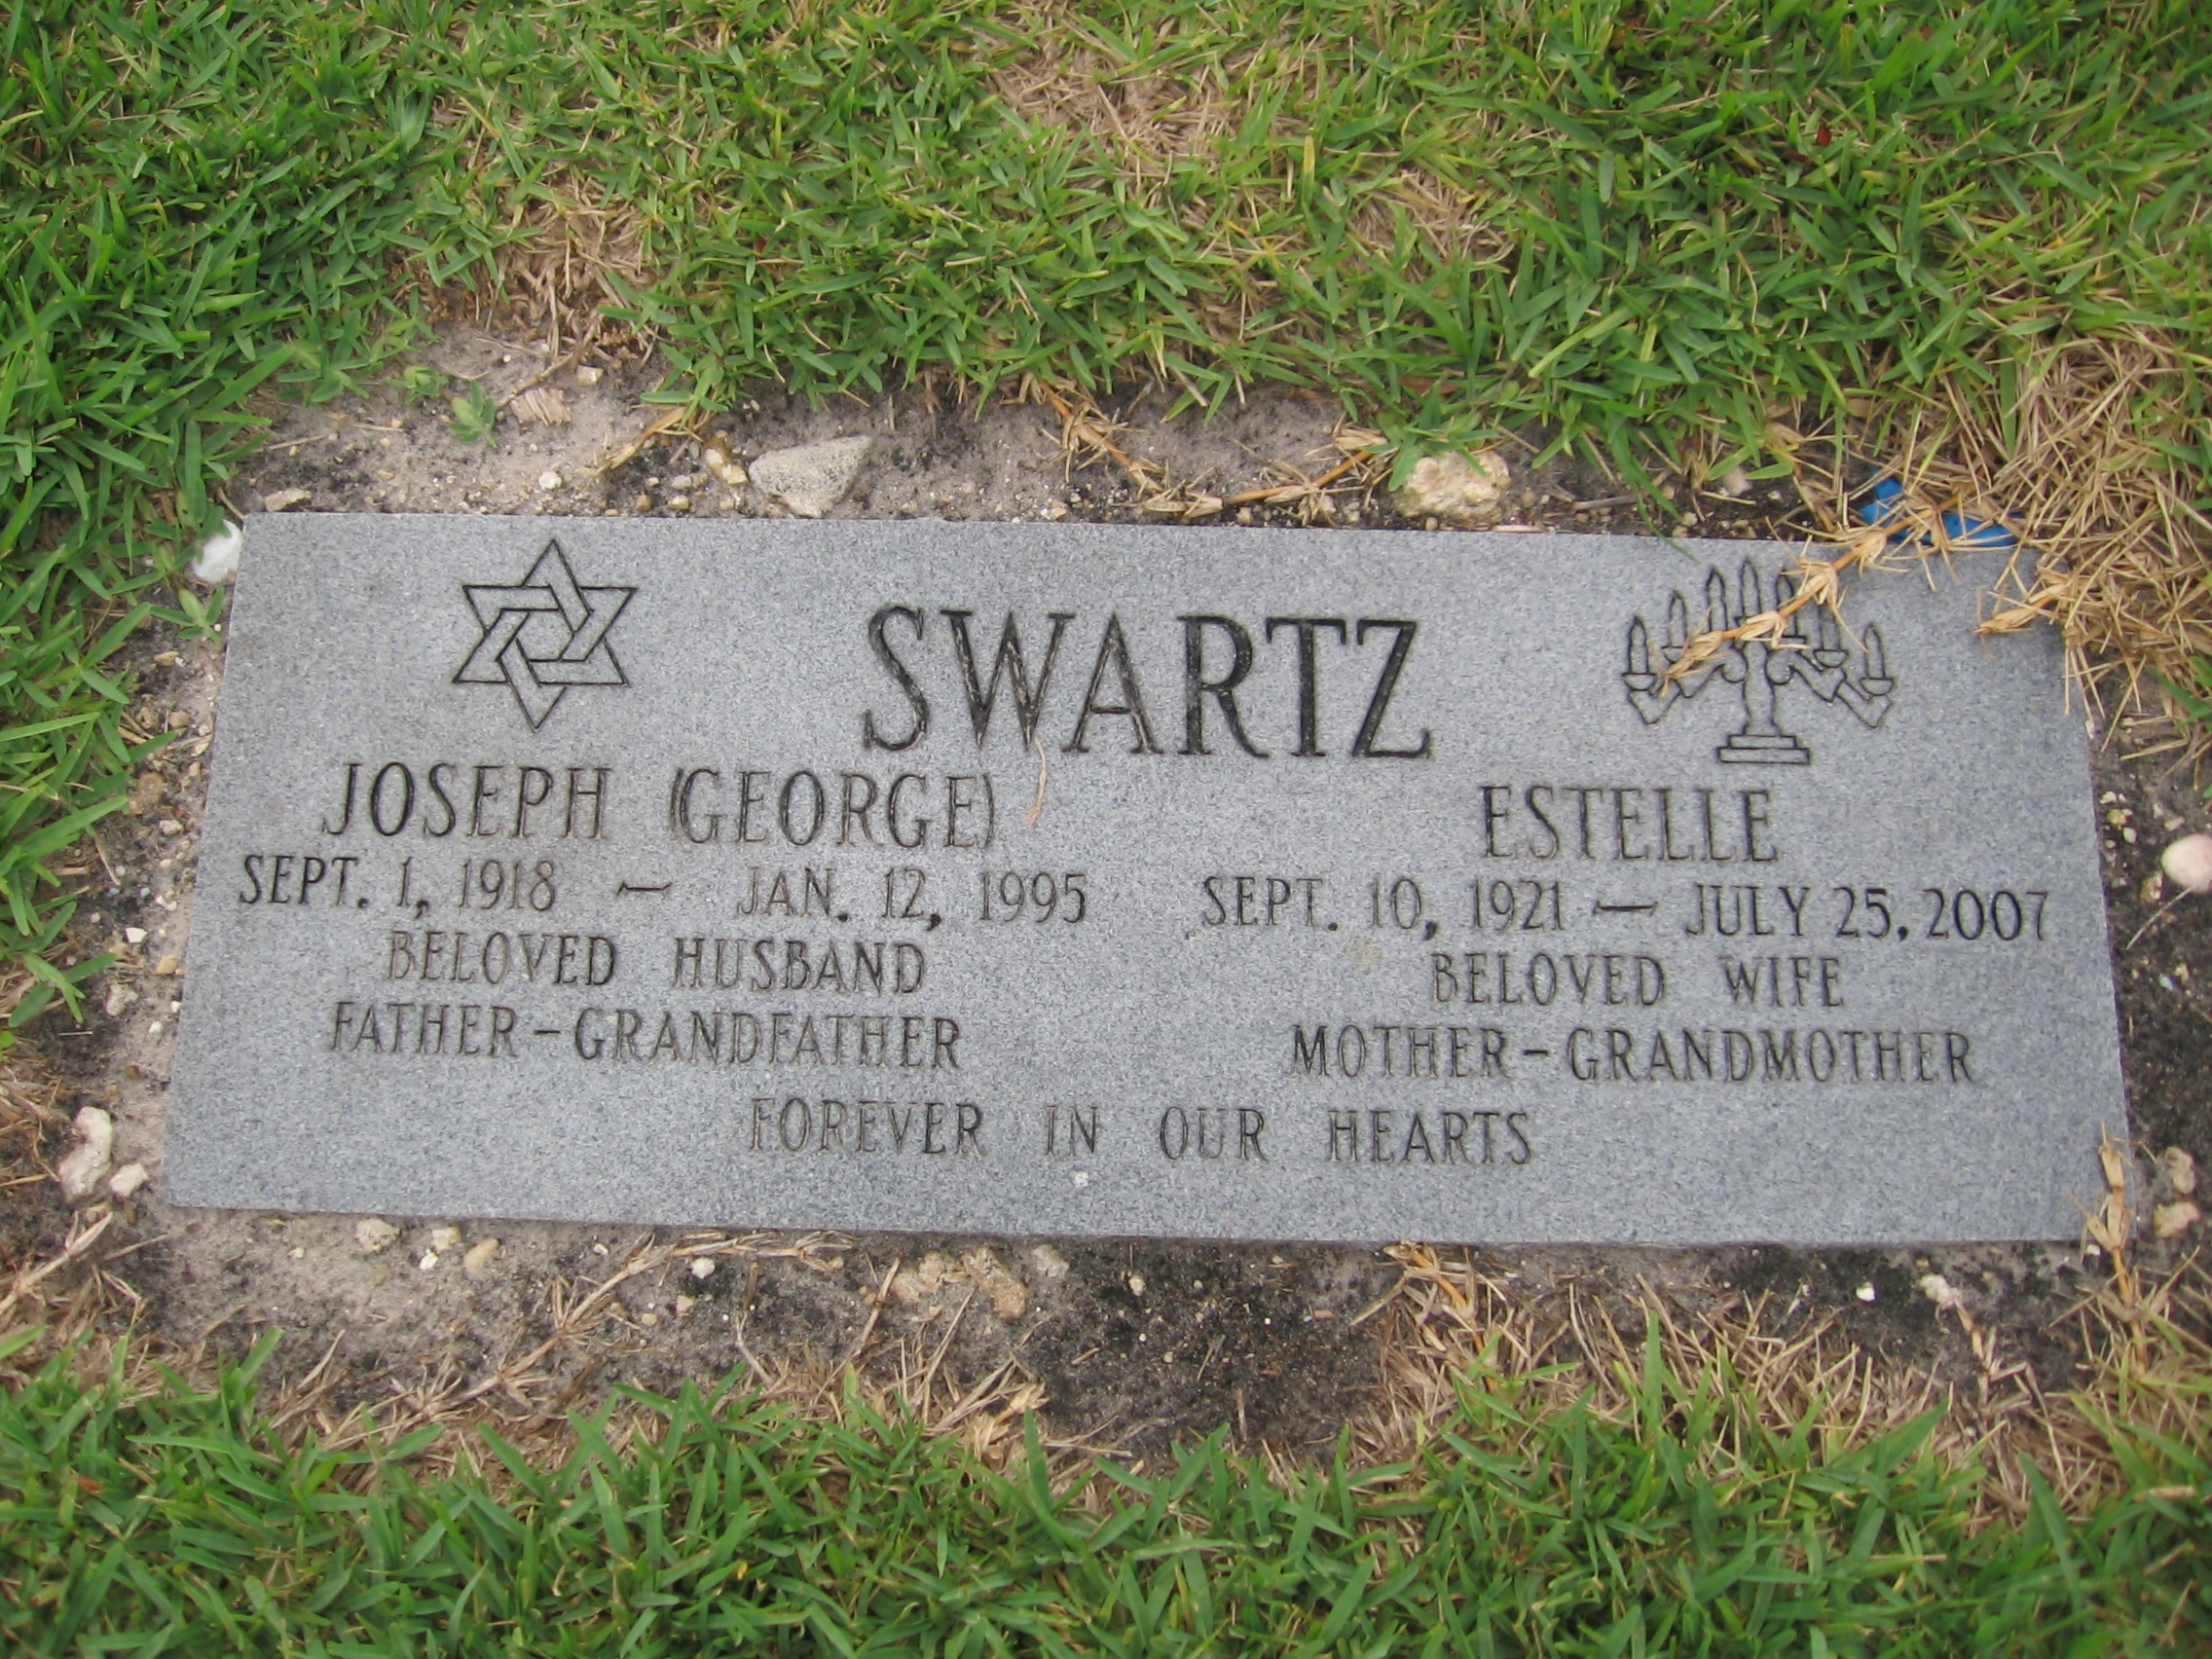 Joseph "George" Swartz